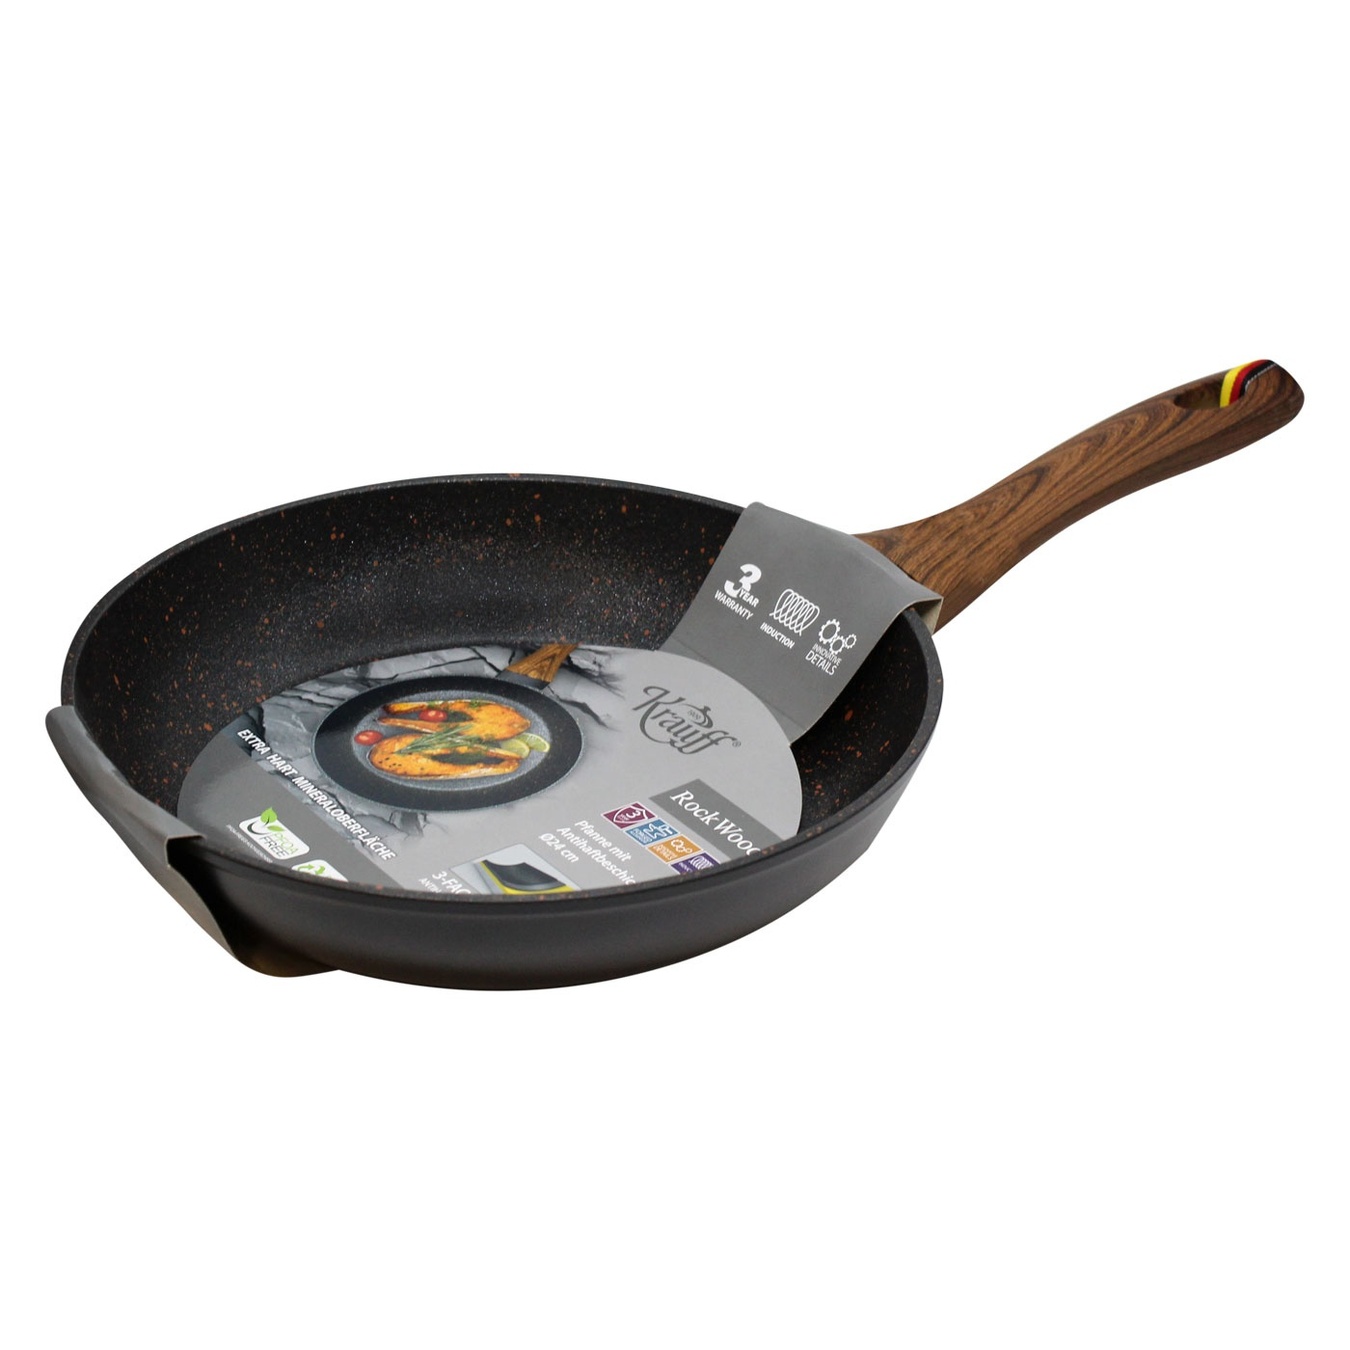 Krauff Megastone aluminum frying pan with non-stick relief coating 24 cm